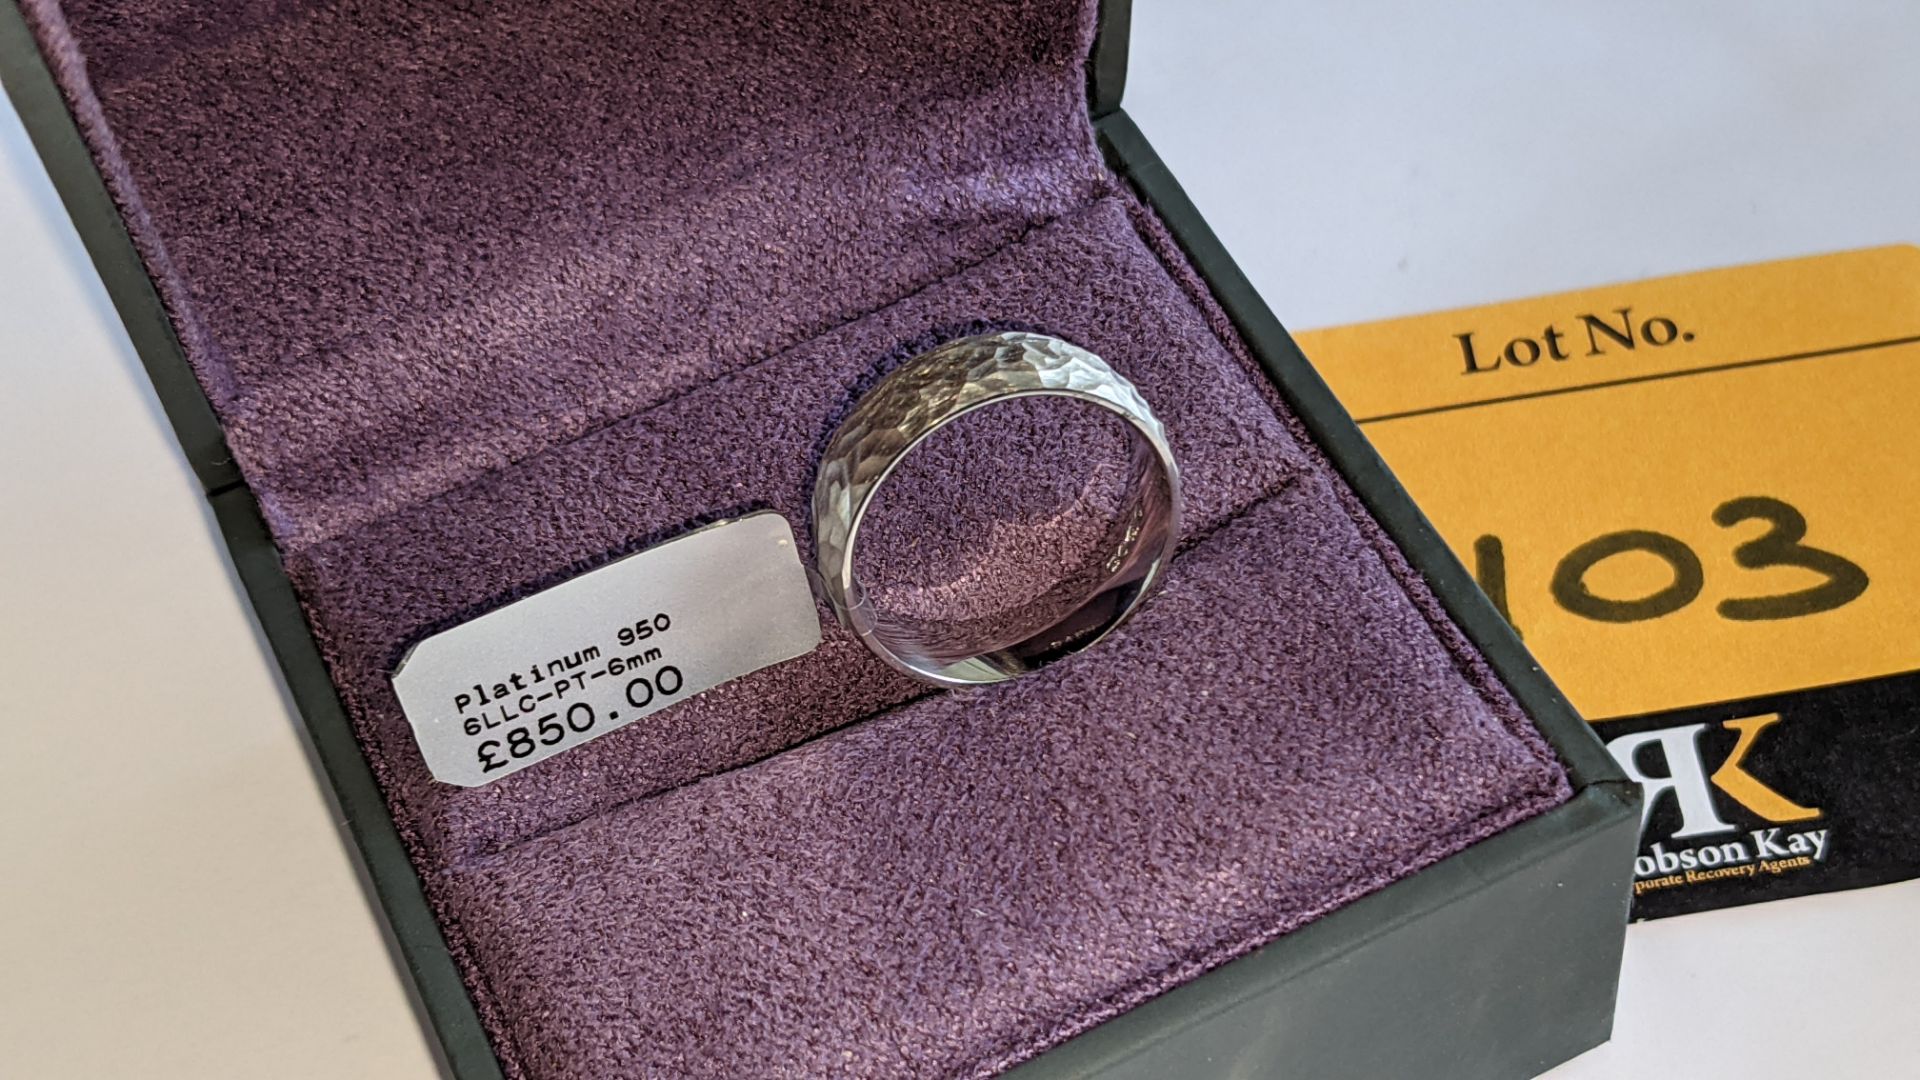 Platinum 950 6mm textured wedding ring. RRP £850 - Image 12 of 12